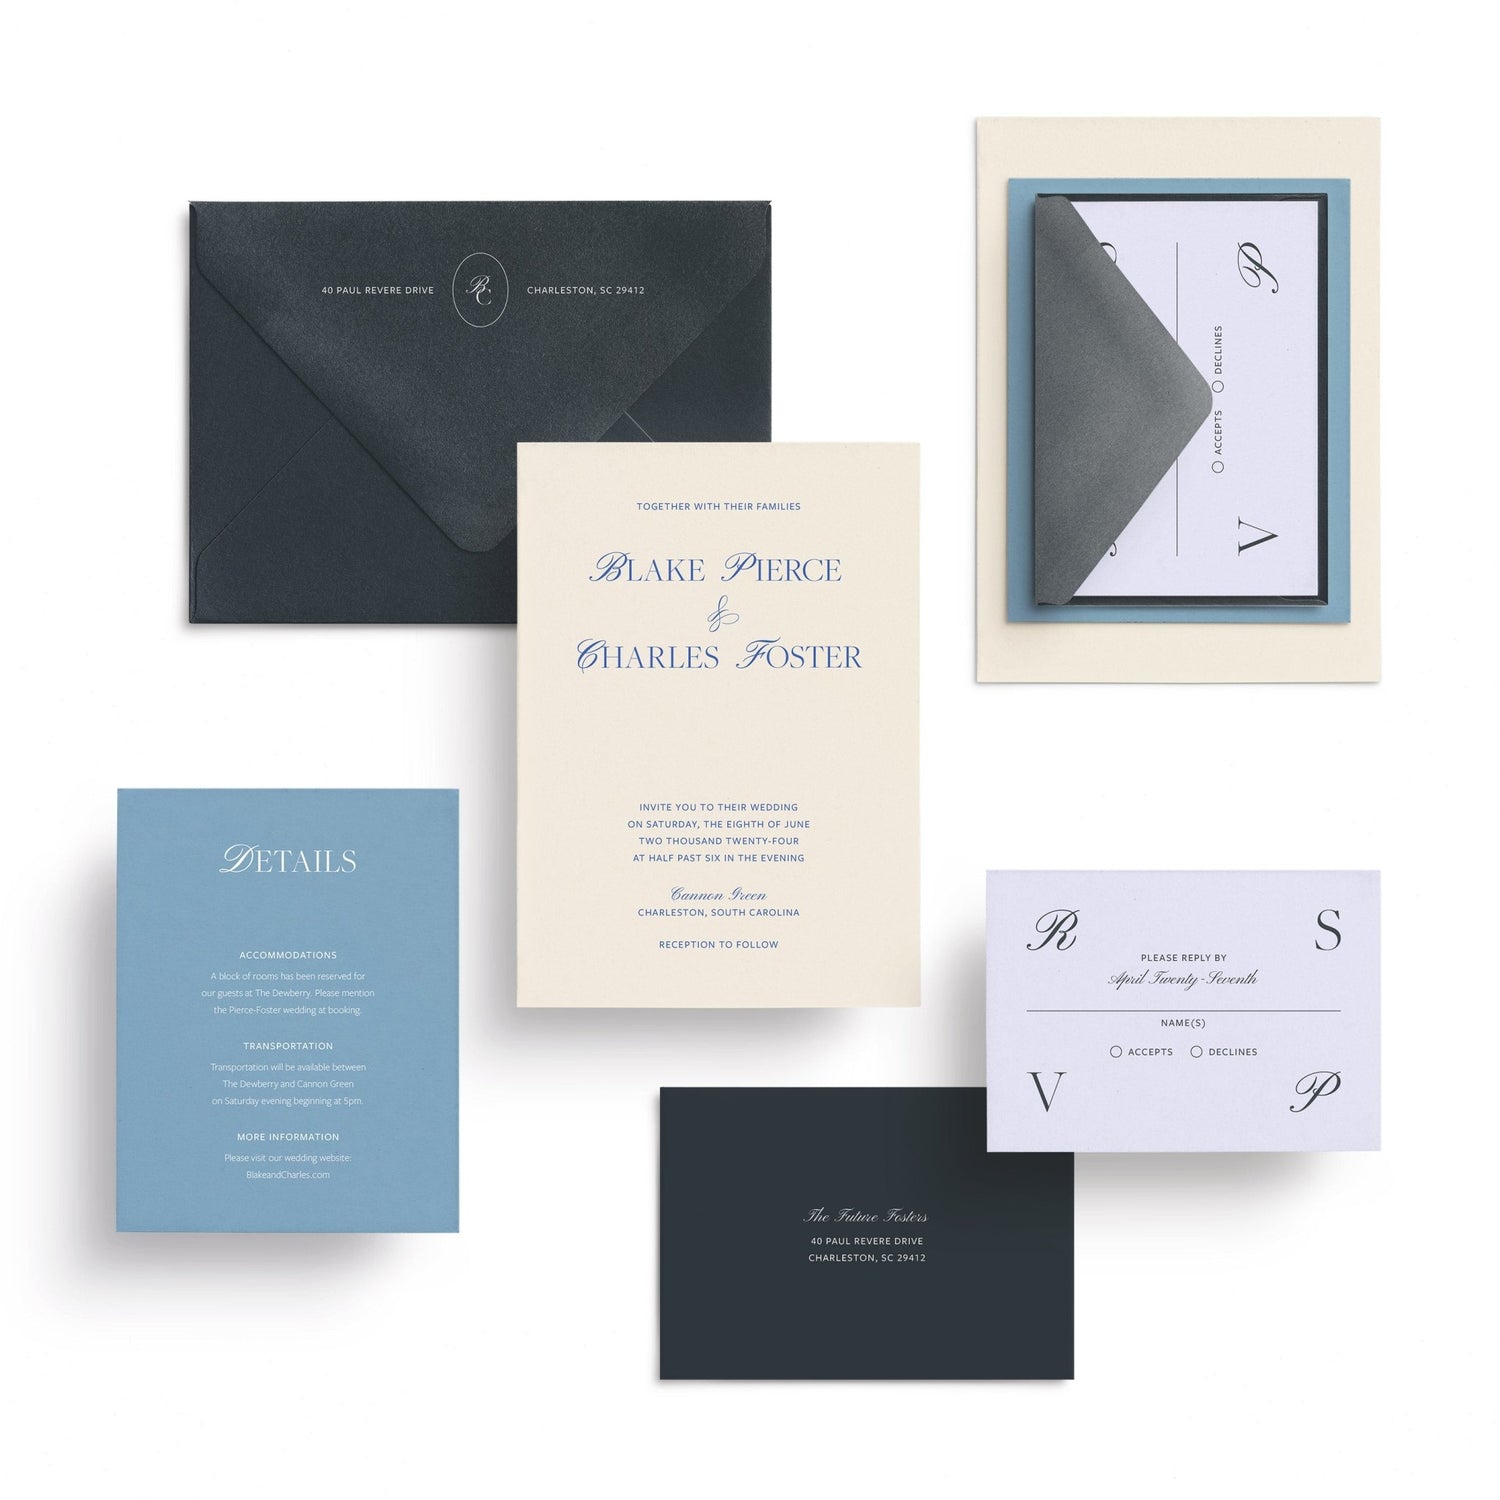 Customizable wedding invitation suite inspired by Charleston, South Carolina.